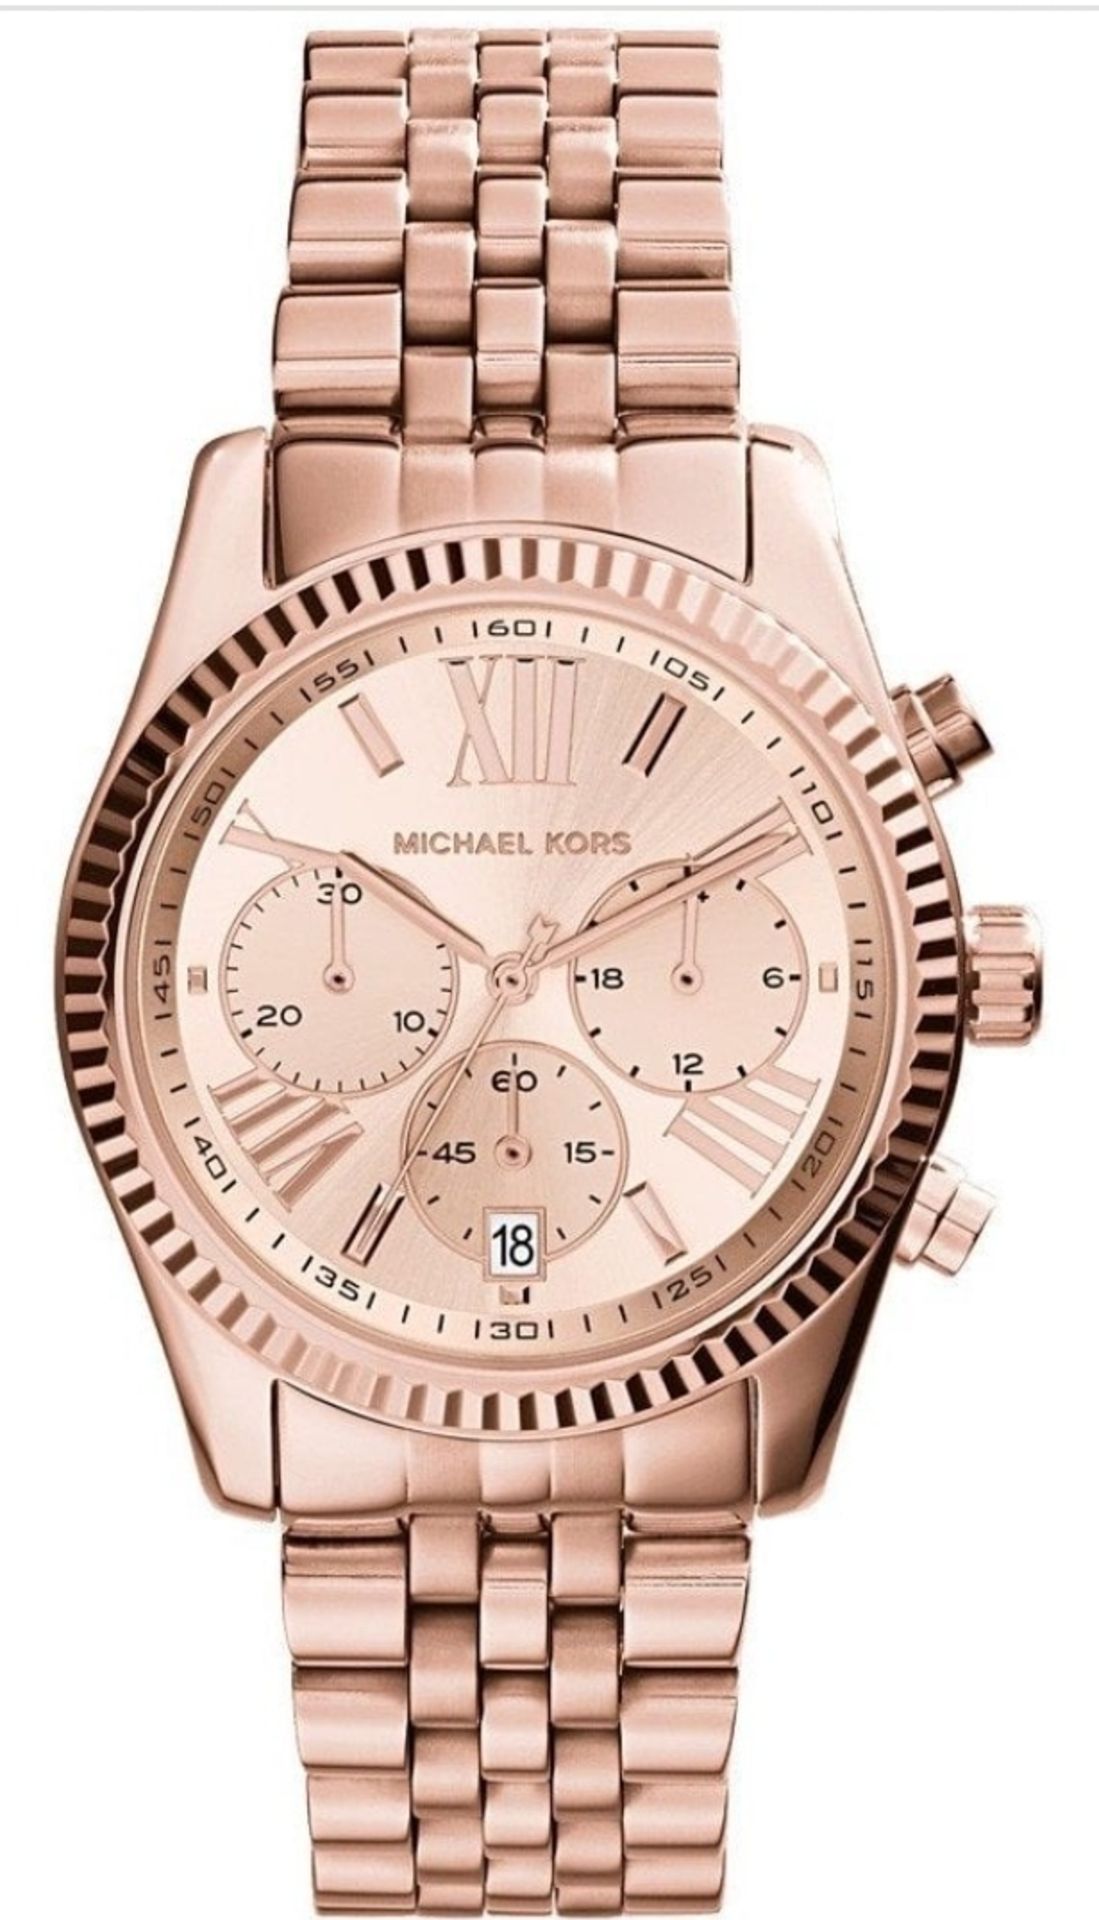 Michael Kors MK5569 Ladies Rose Gold Lexington Quartz Watch - Image 2 of 8